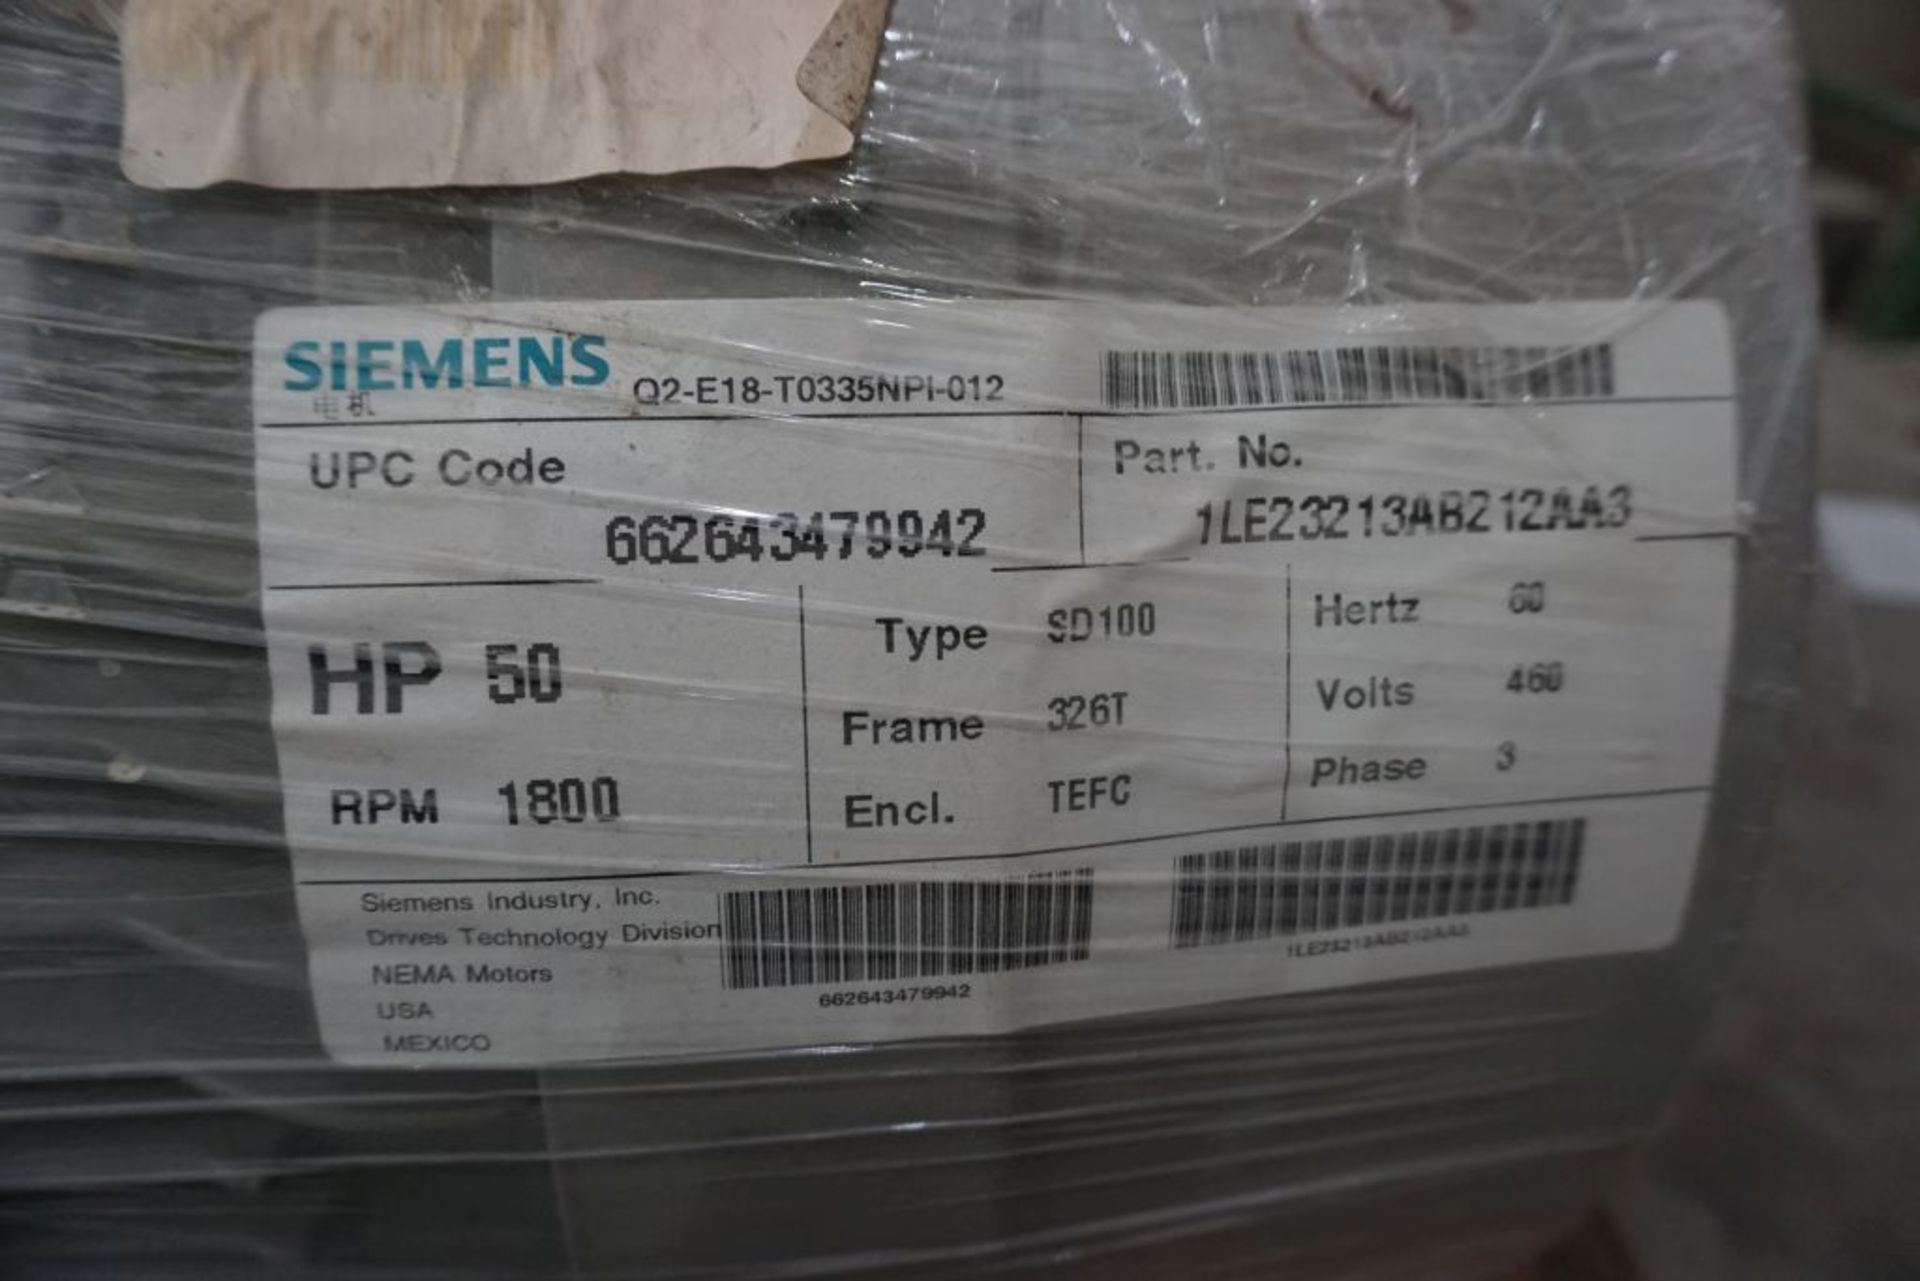 Siemens 50 HP Motor | Cat No. Q2 E18 T03J5NPI-012; 460V; 1800 RPM; Frame: 326T - Image 3 of 3